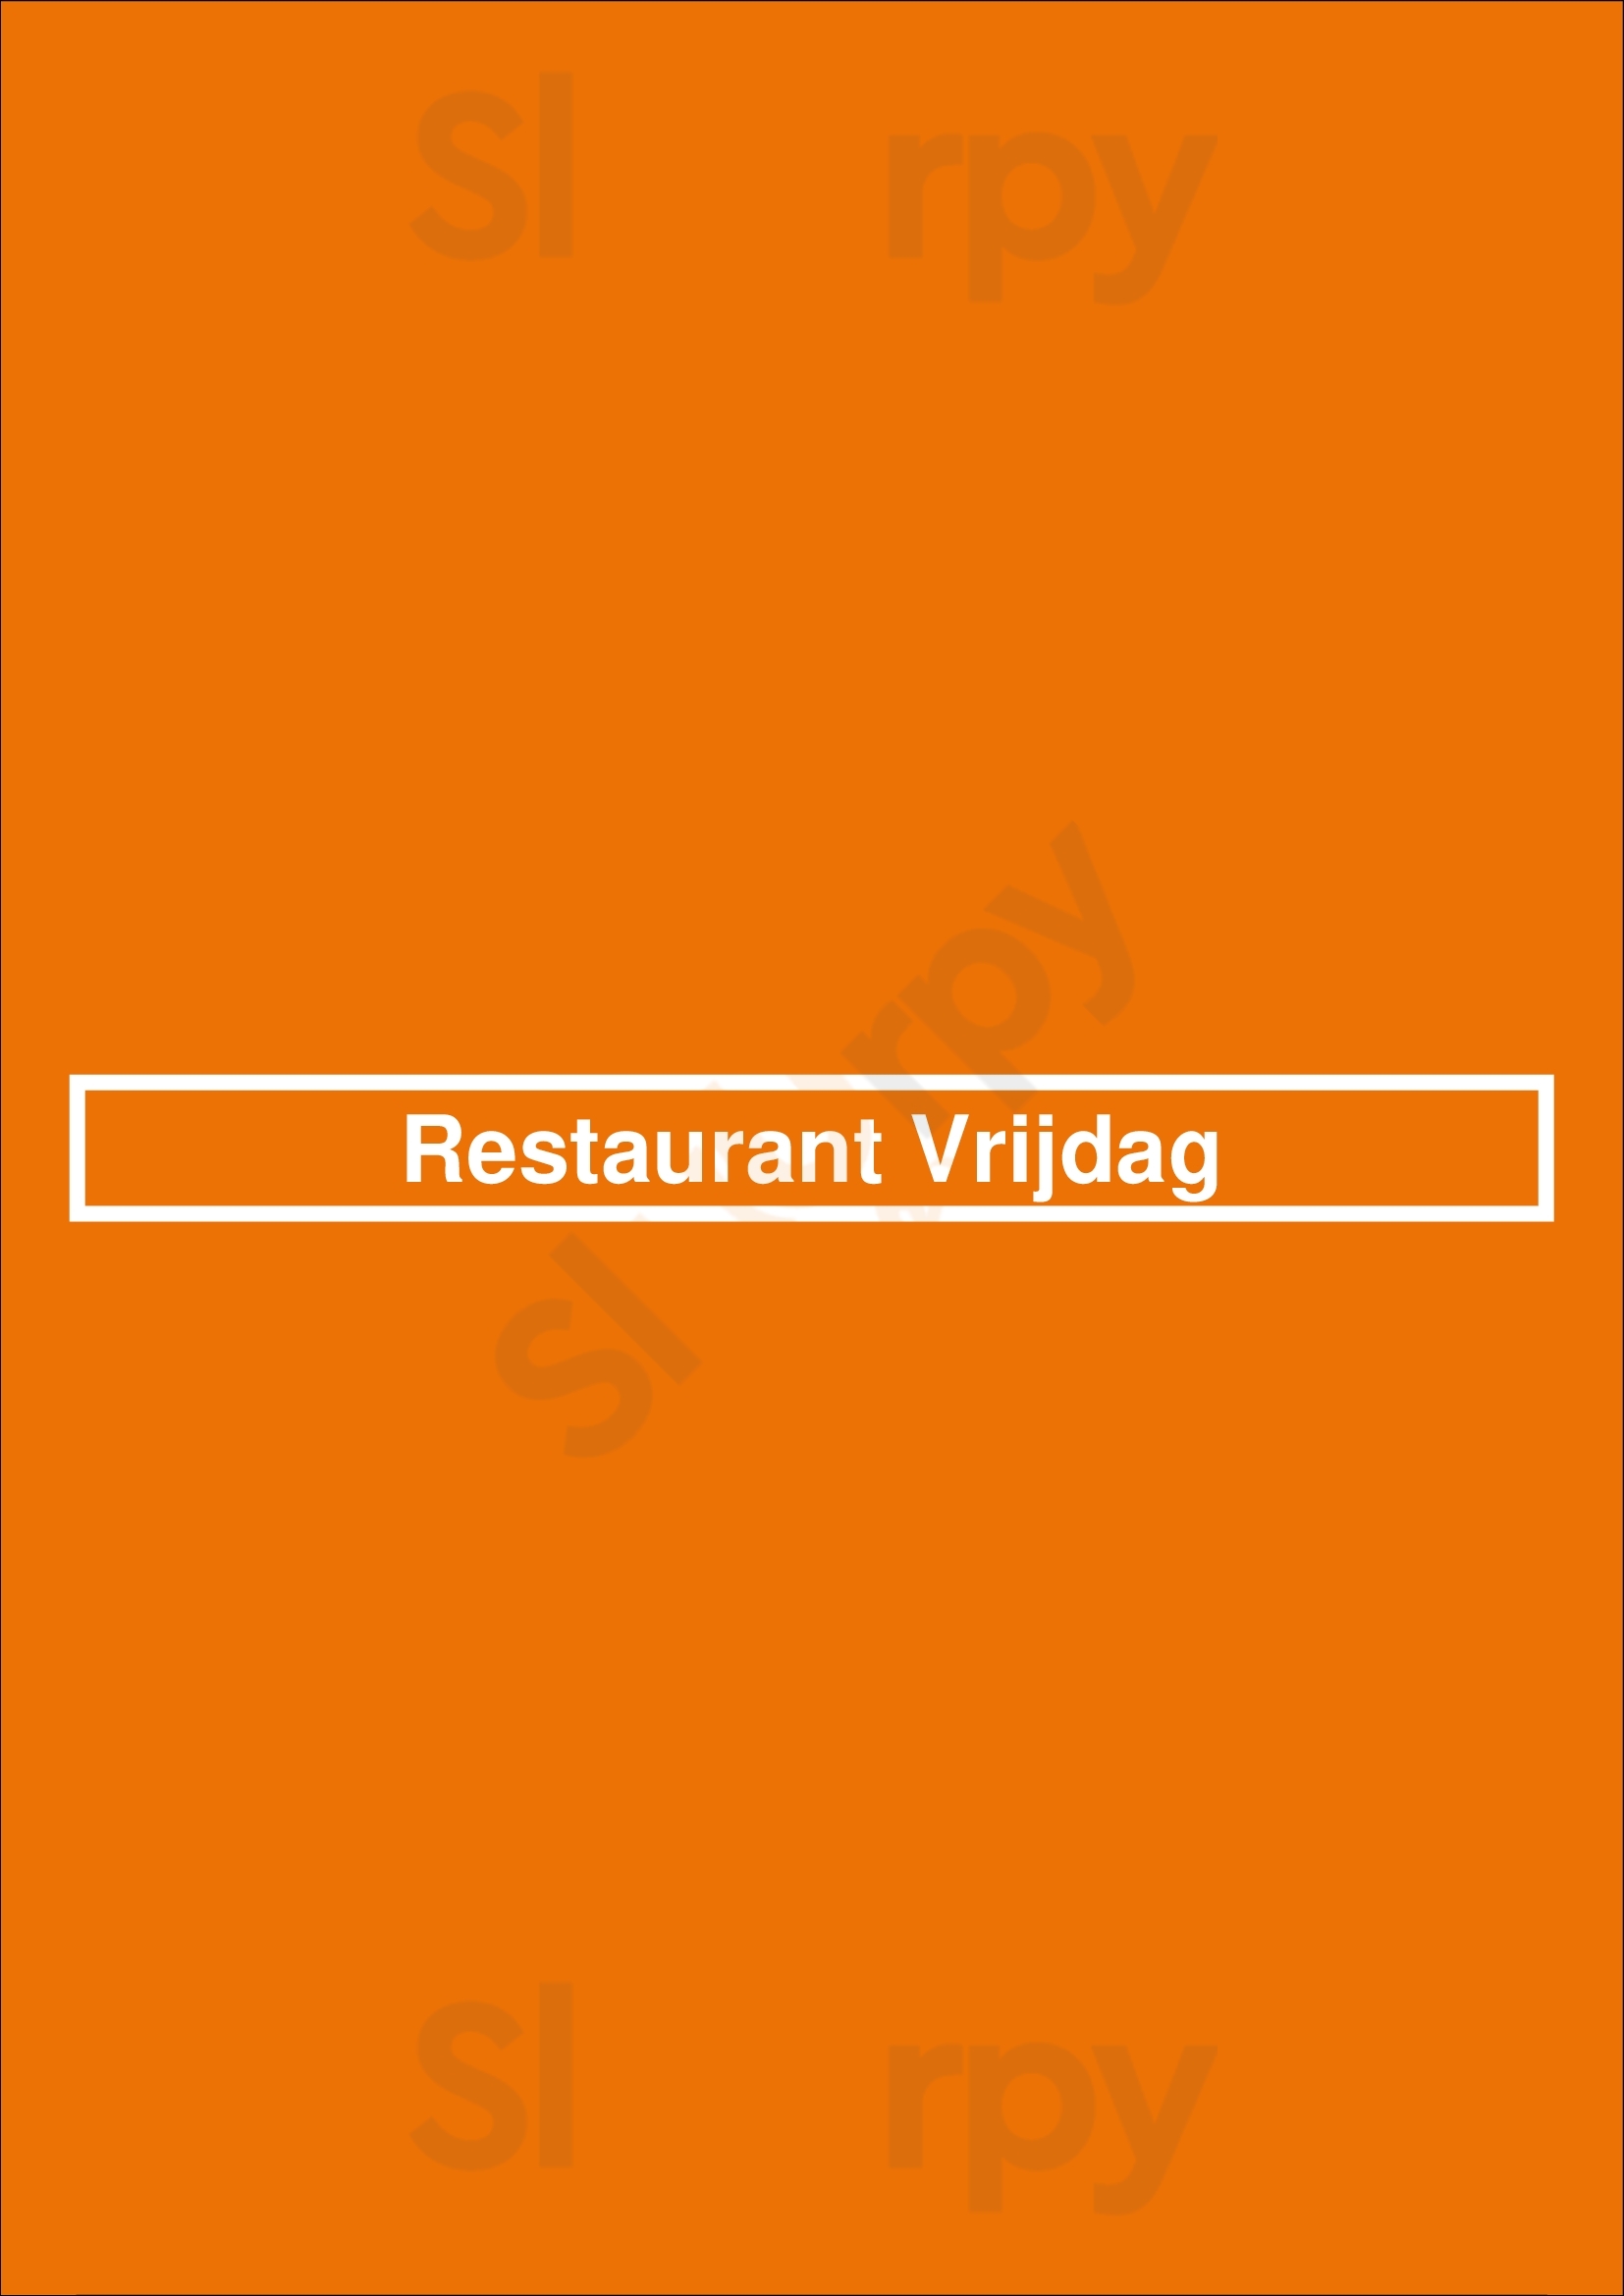 Restaurant Vrijdag Deventer Menu - 1